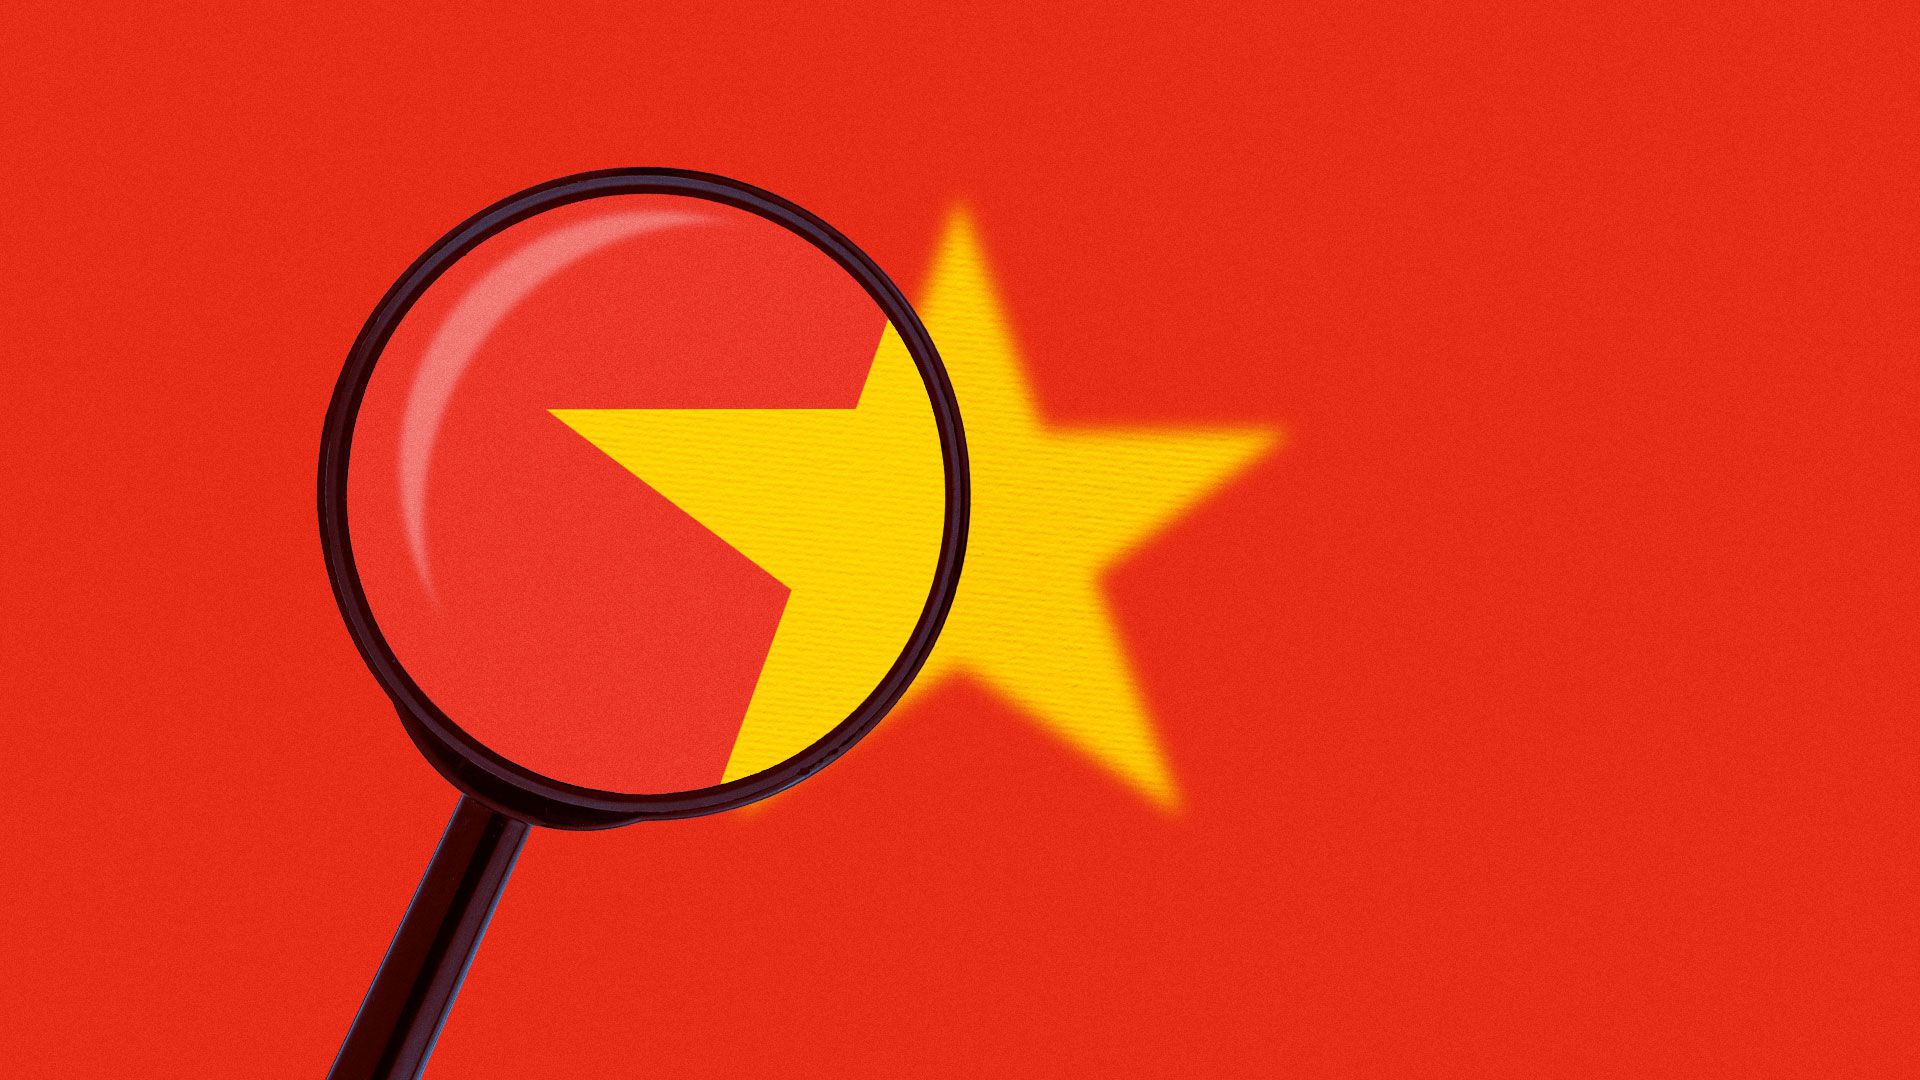 Finland issue warnings on China's espionage